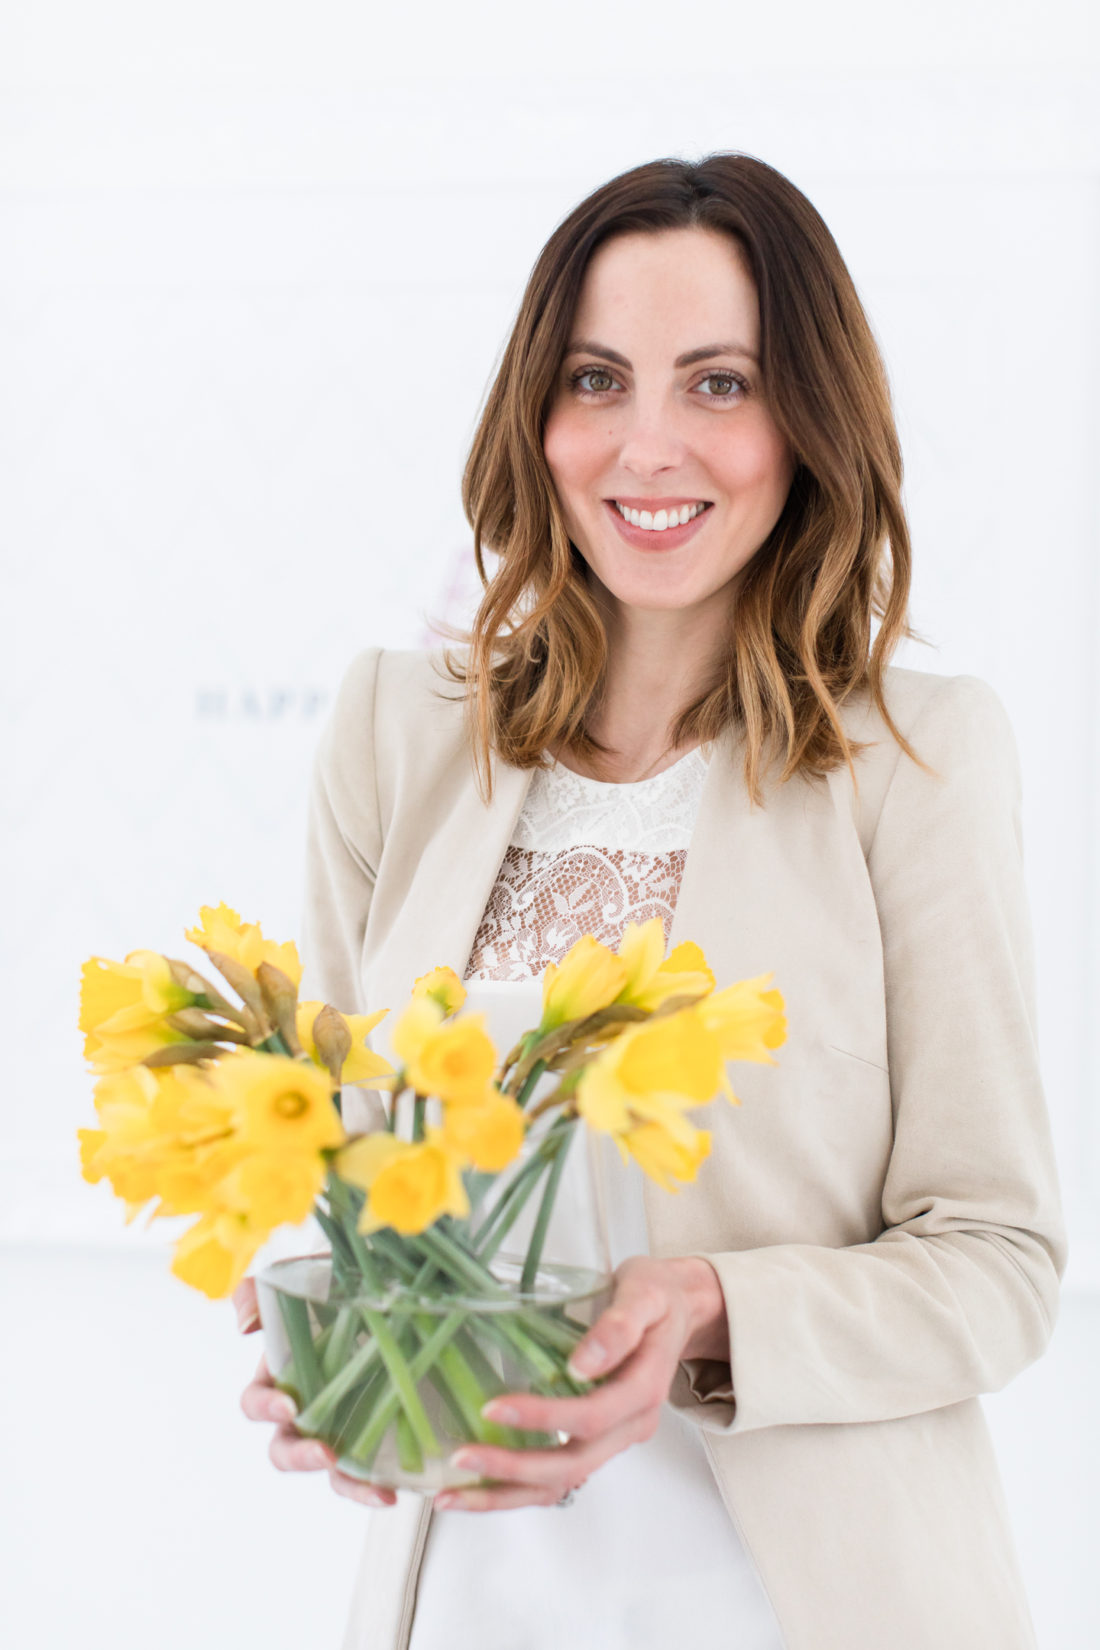 Eva Amurri Martino's studio for lifestyle and motherhood blog Happily Eva After